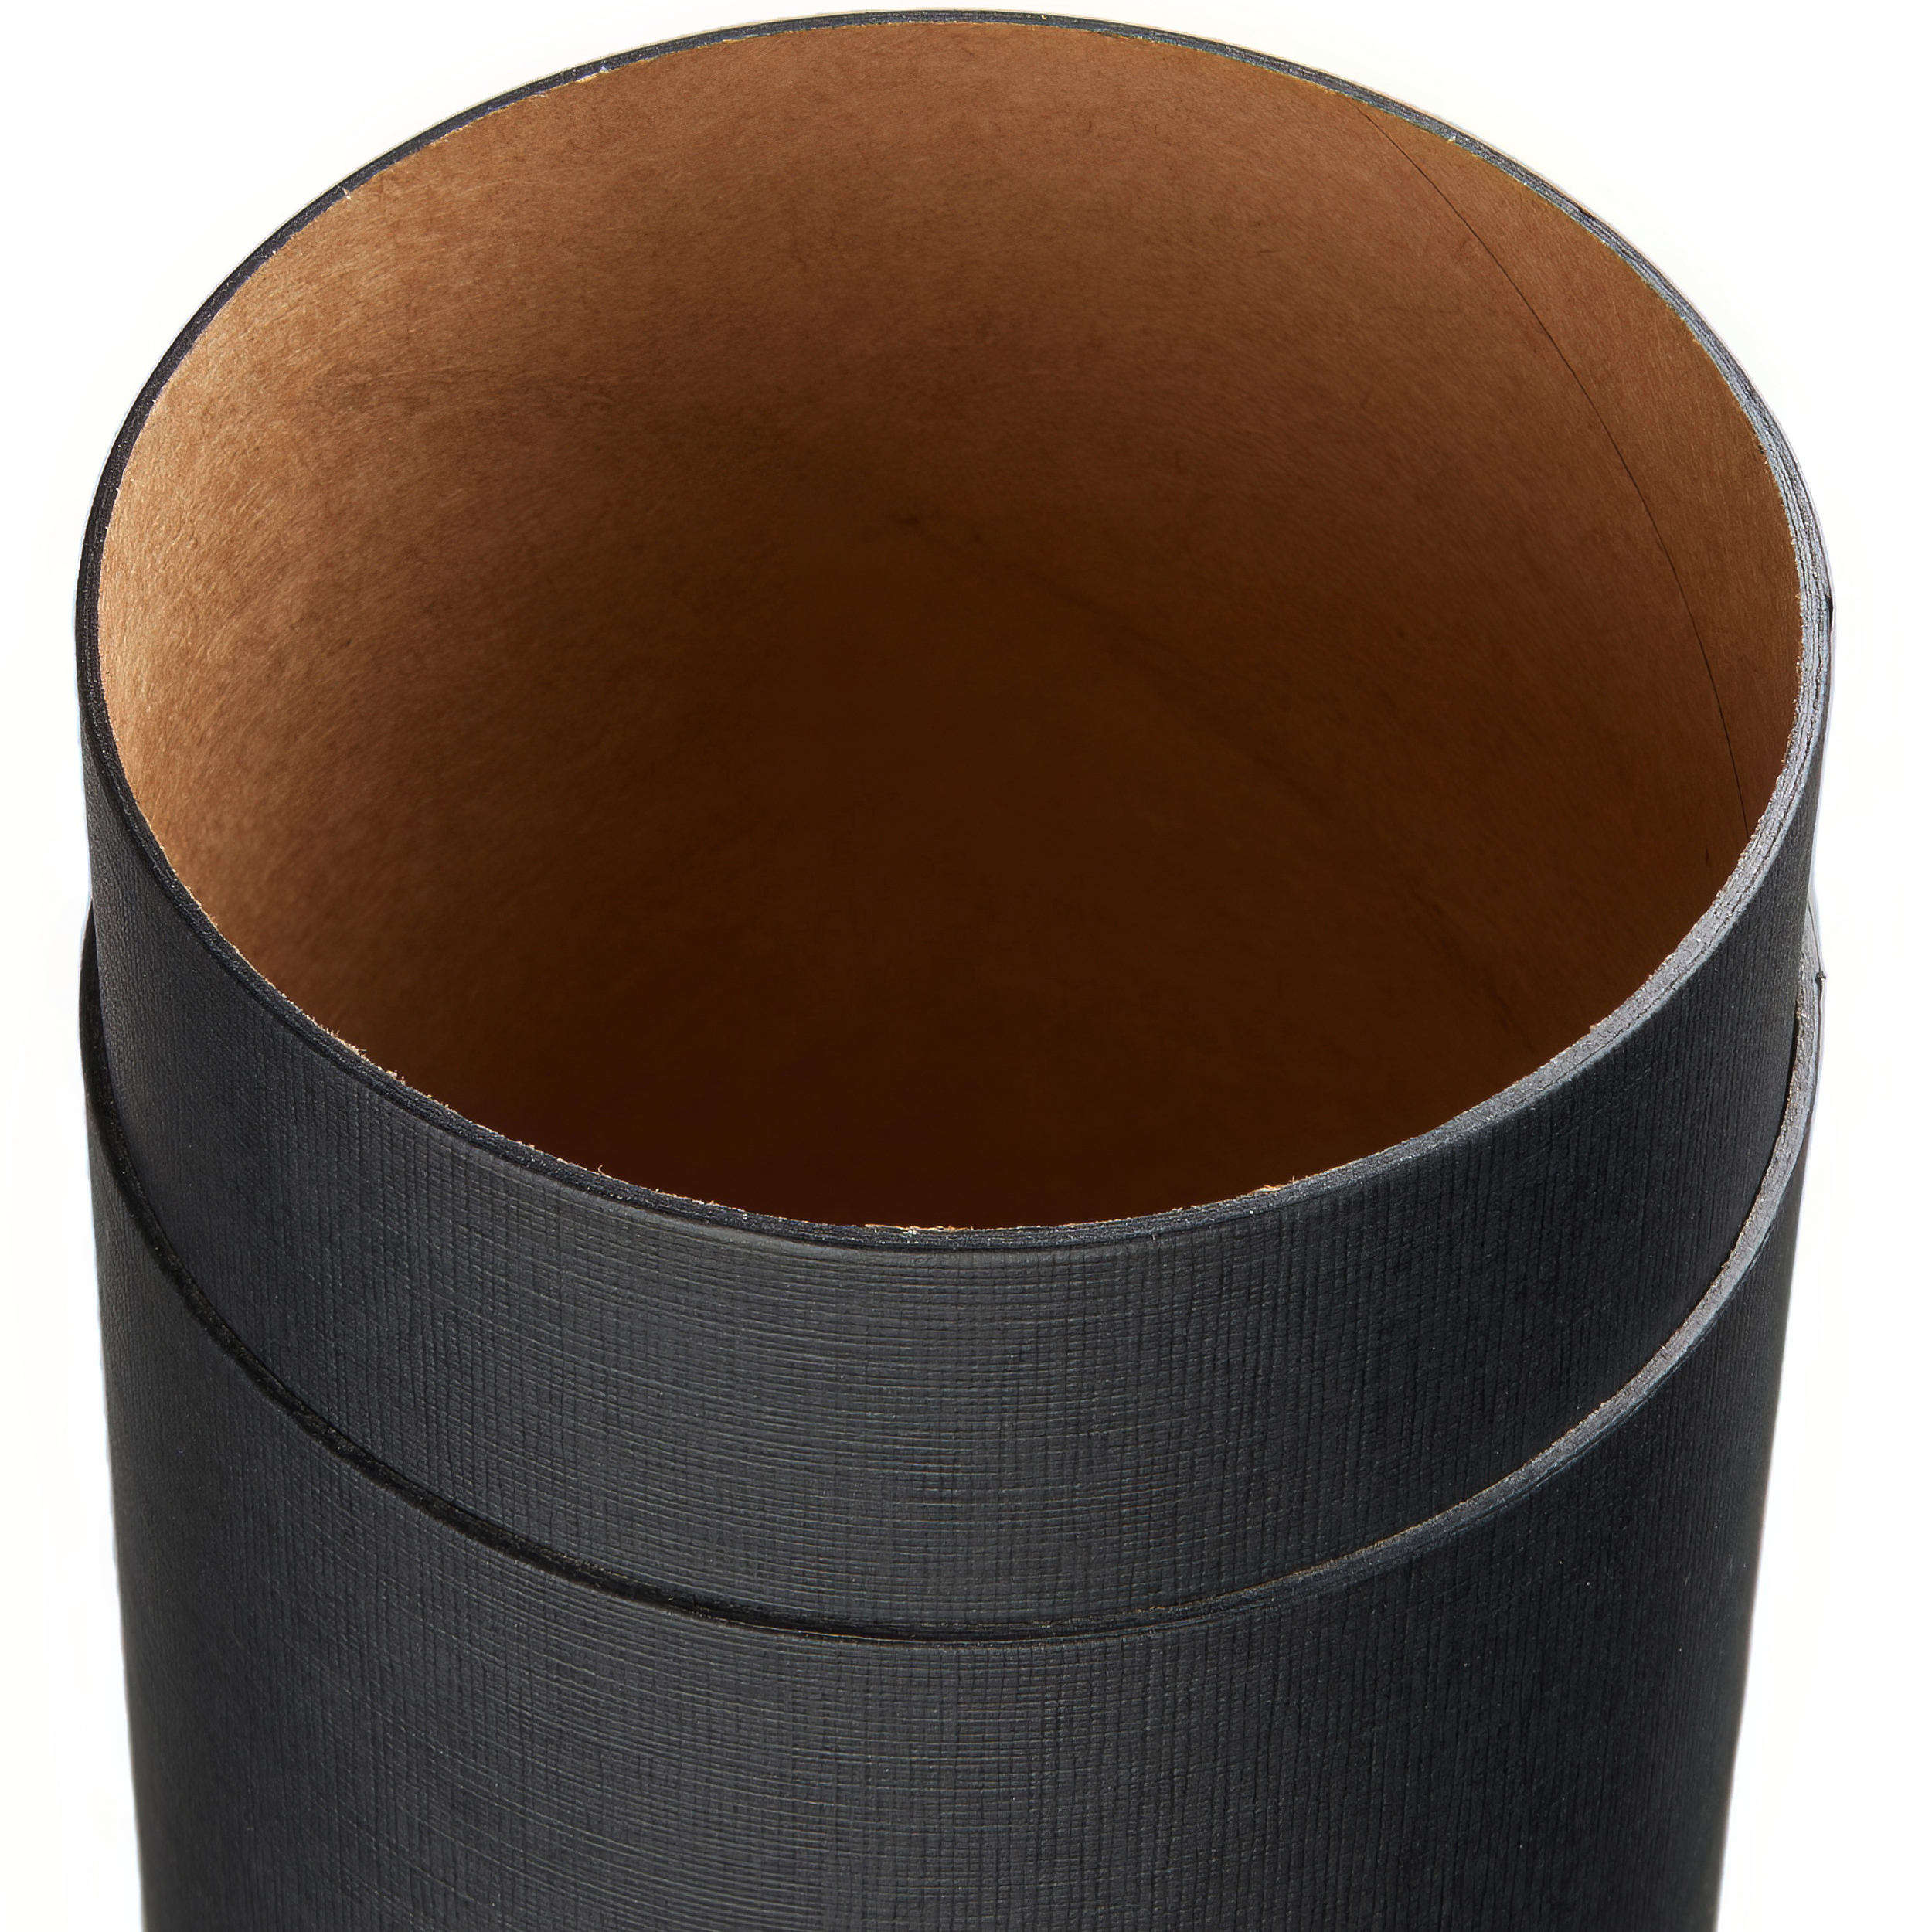 50 Pappdosen schwarz linon | 95 x 45 mm I food grade